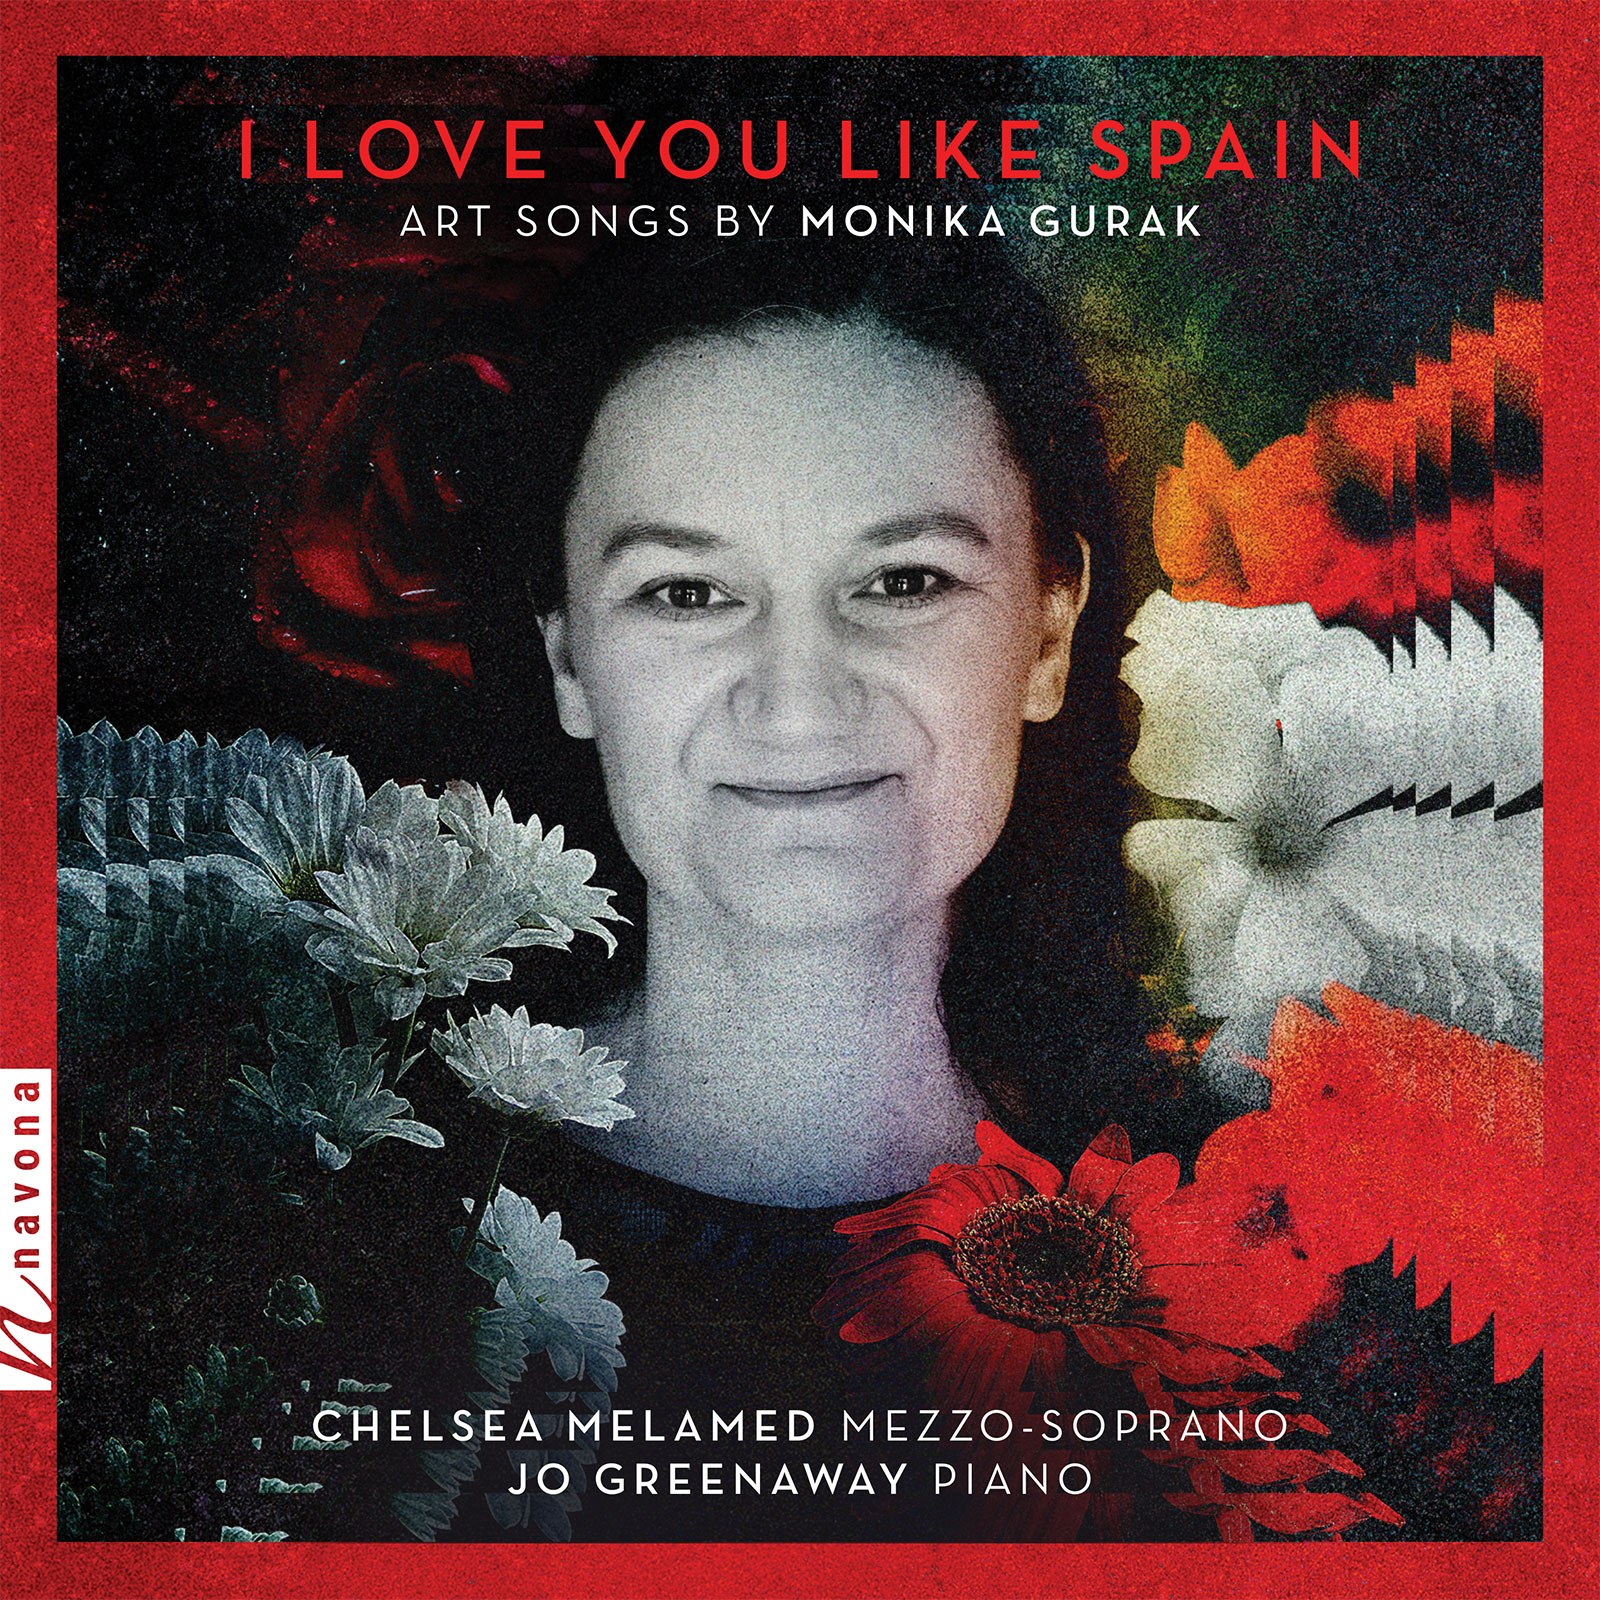 I LOVE YOU LIKE SPAIN - album cover